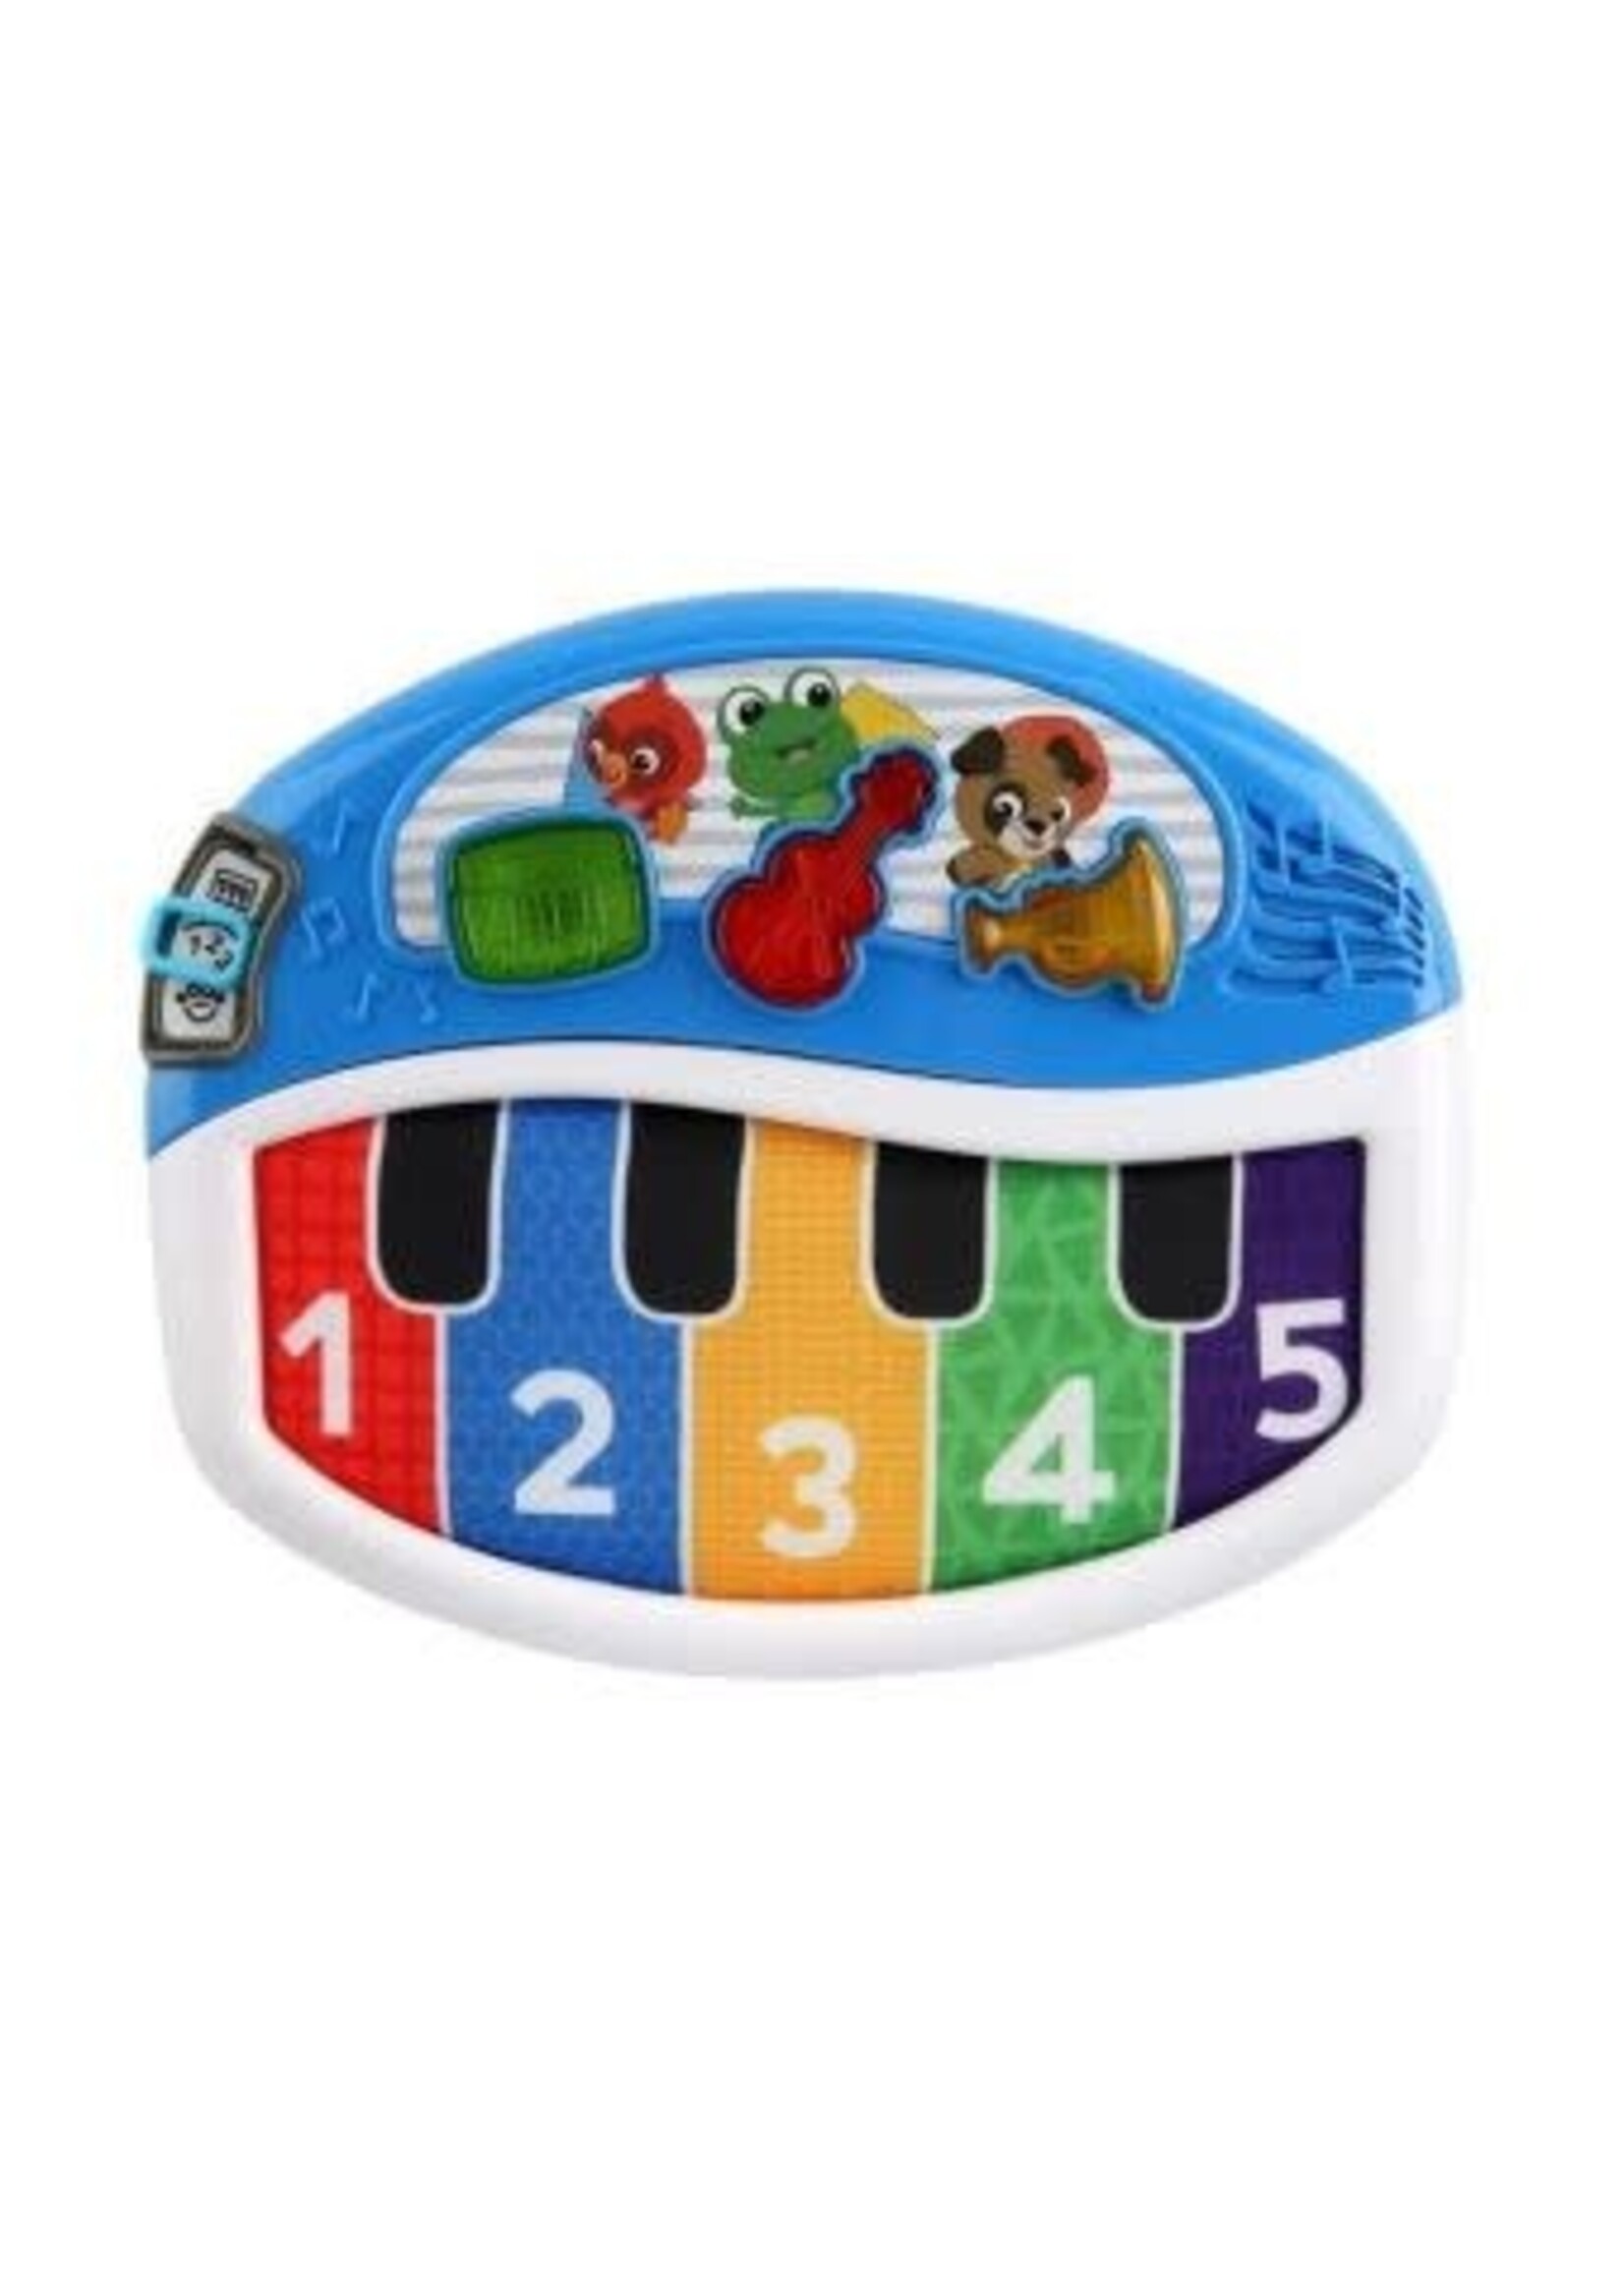 Muziekinstrument Discover & Play Piano Musical Toy